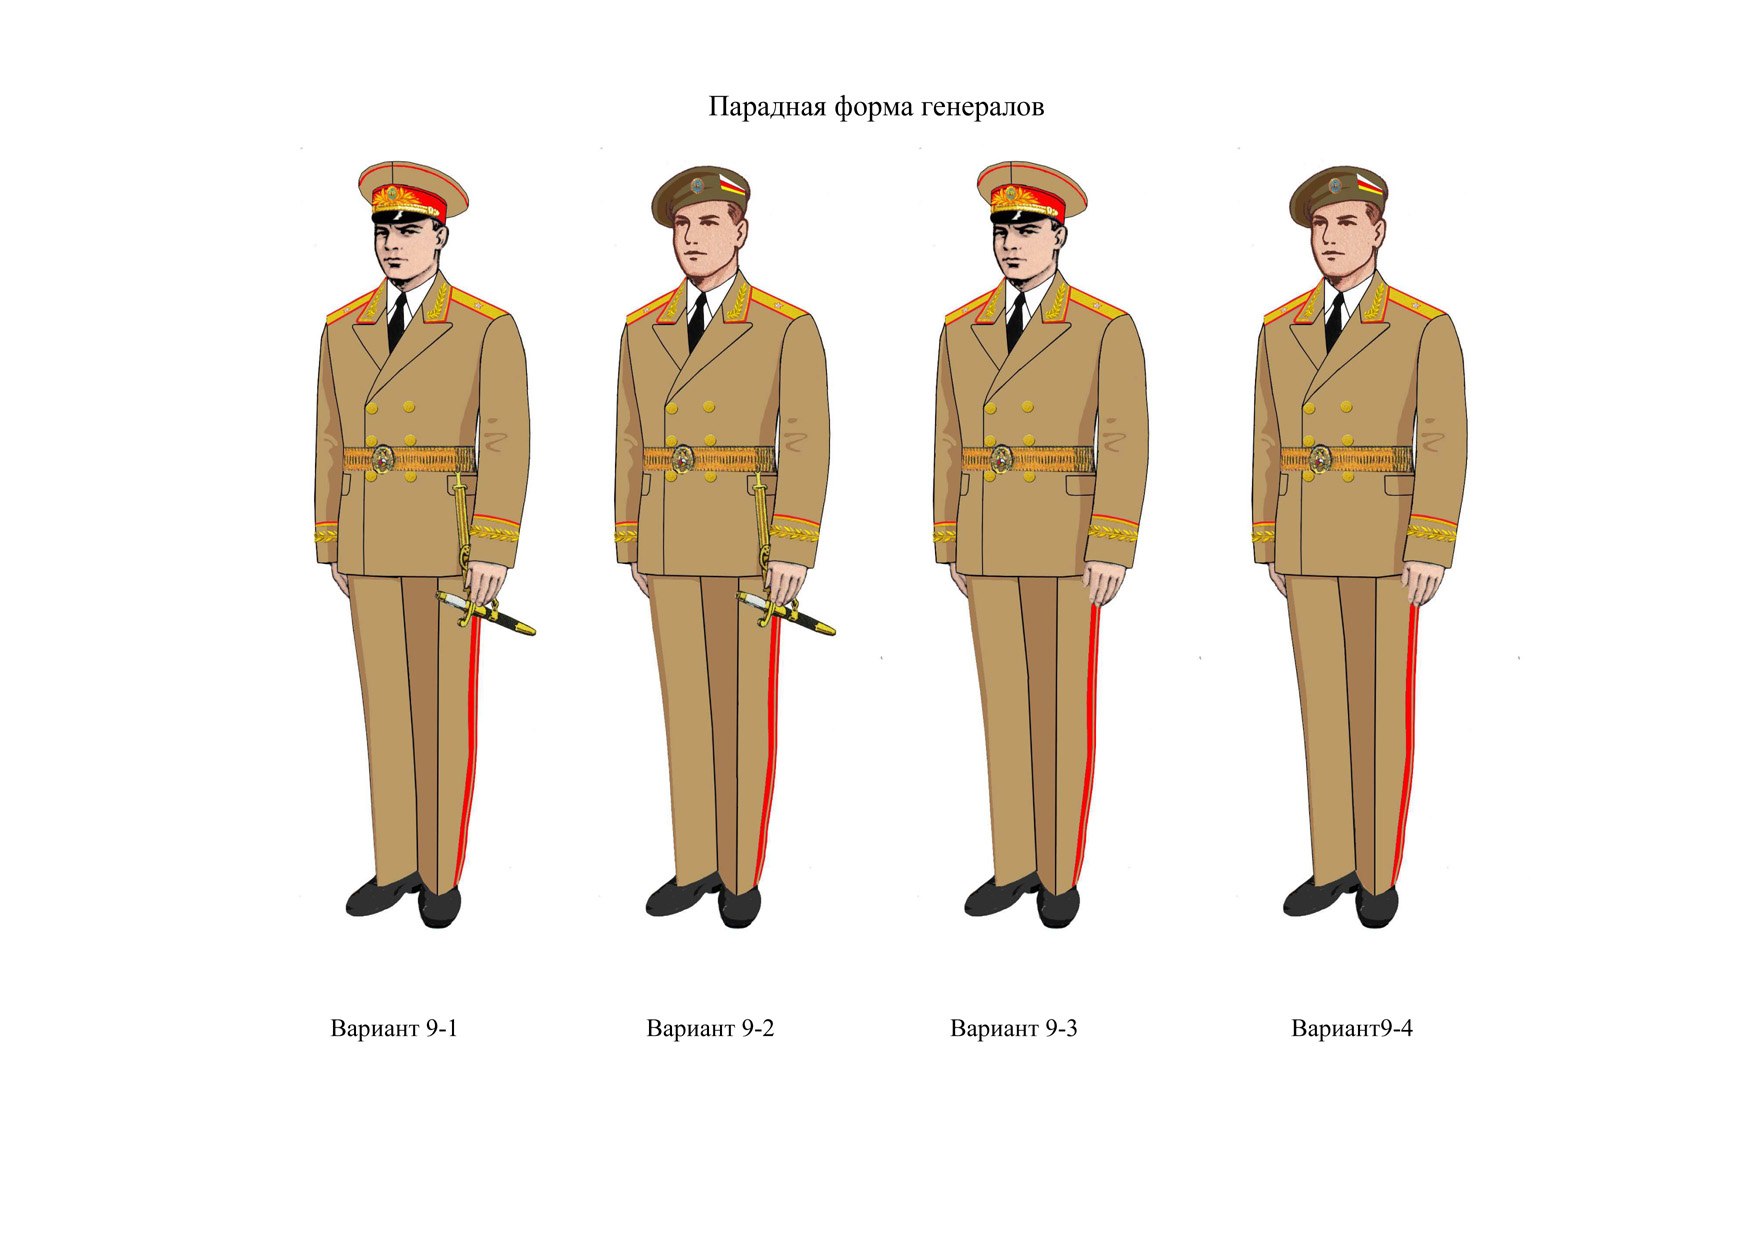 Пехота сухопутная форма одежды